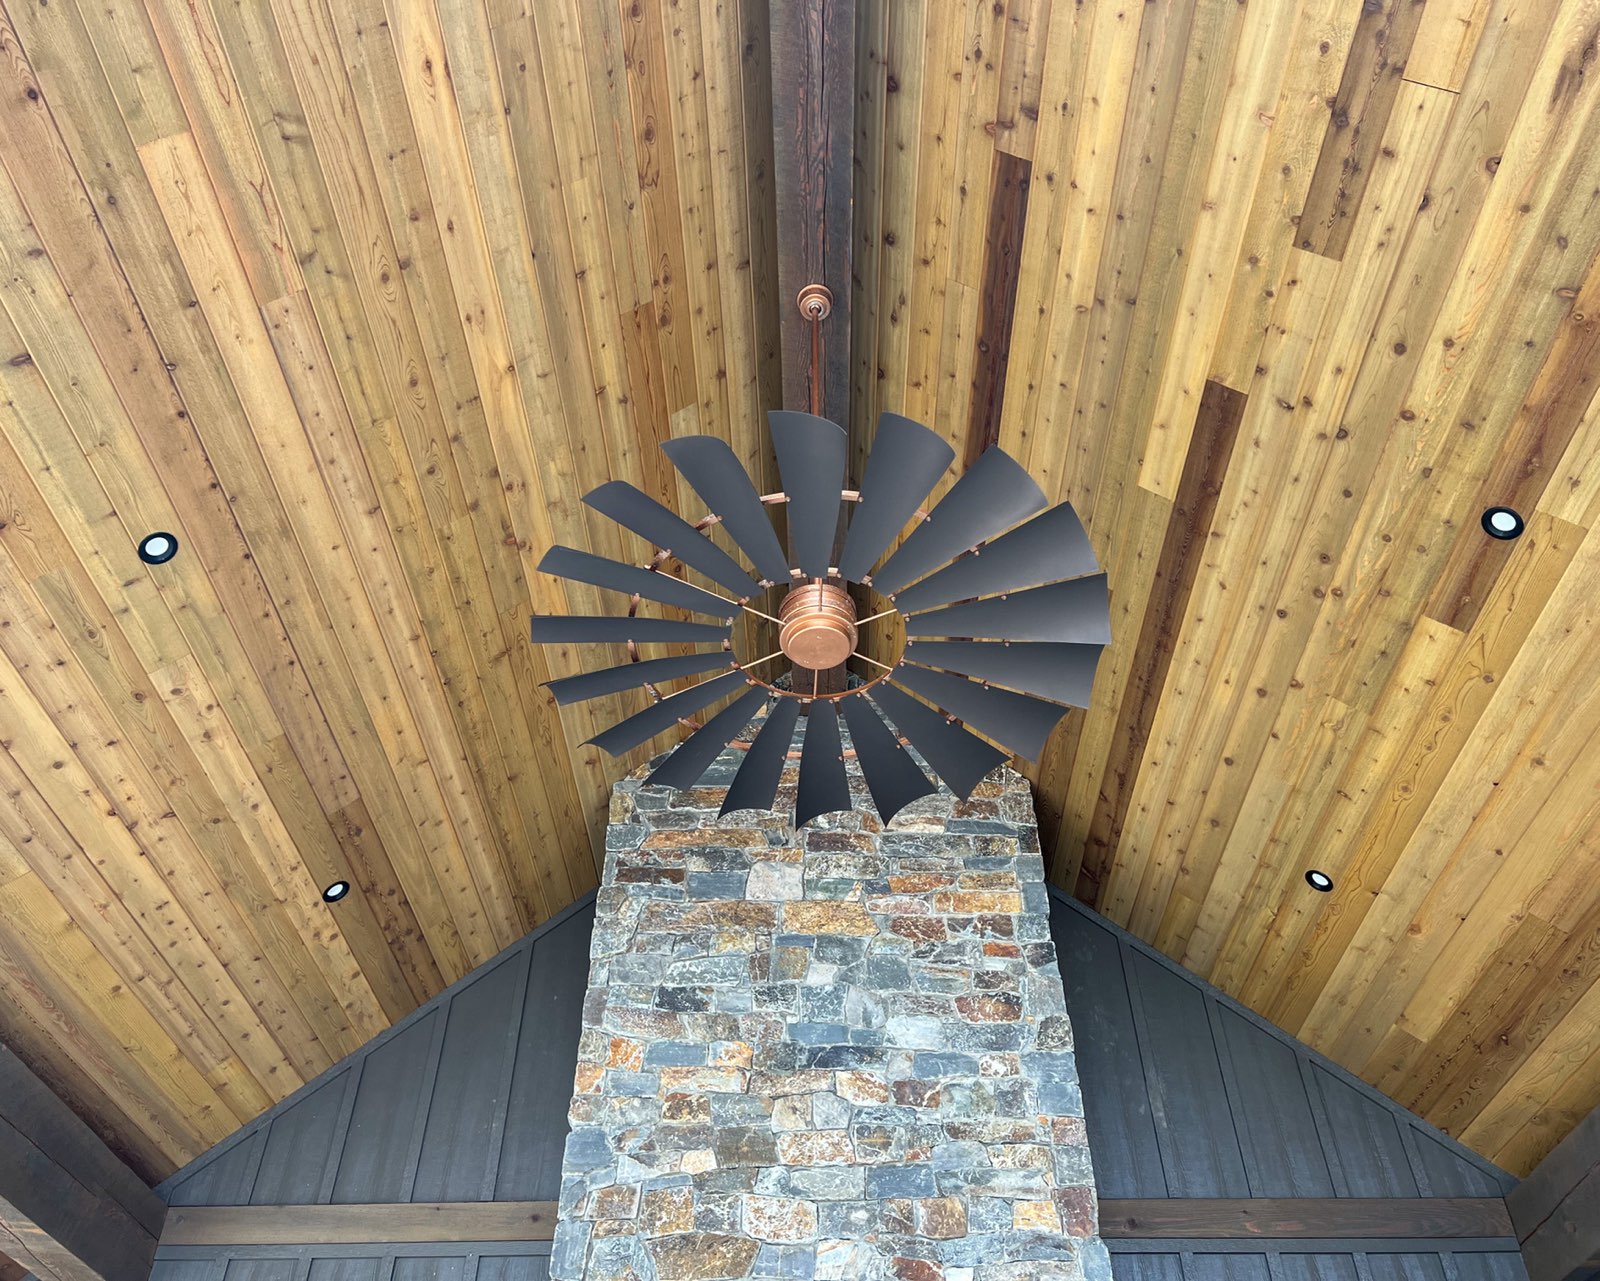 Windmill Ceiling Fans